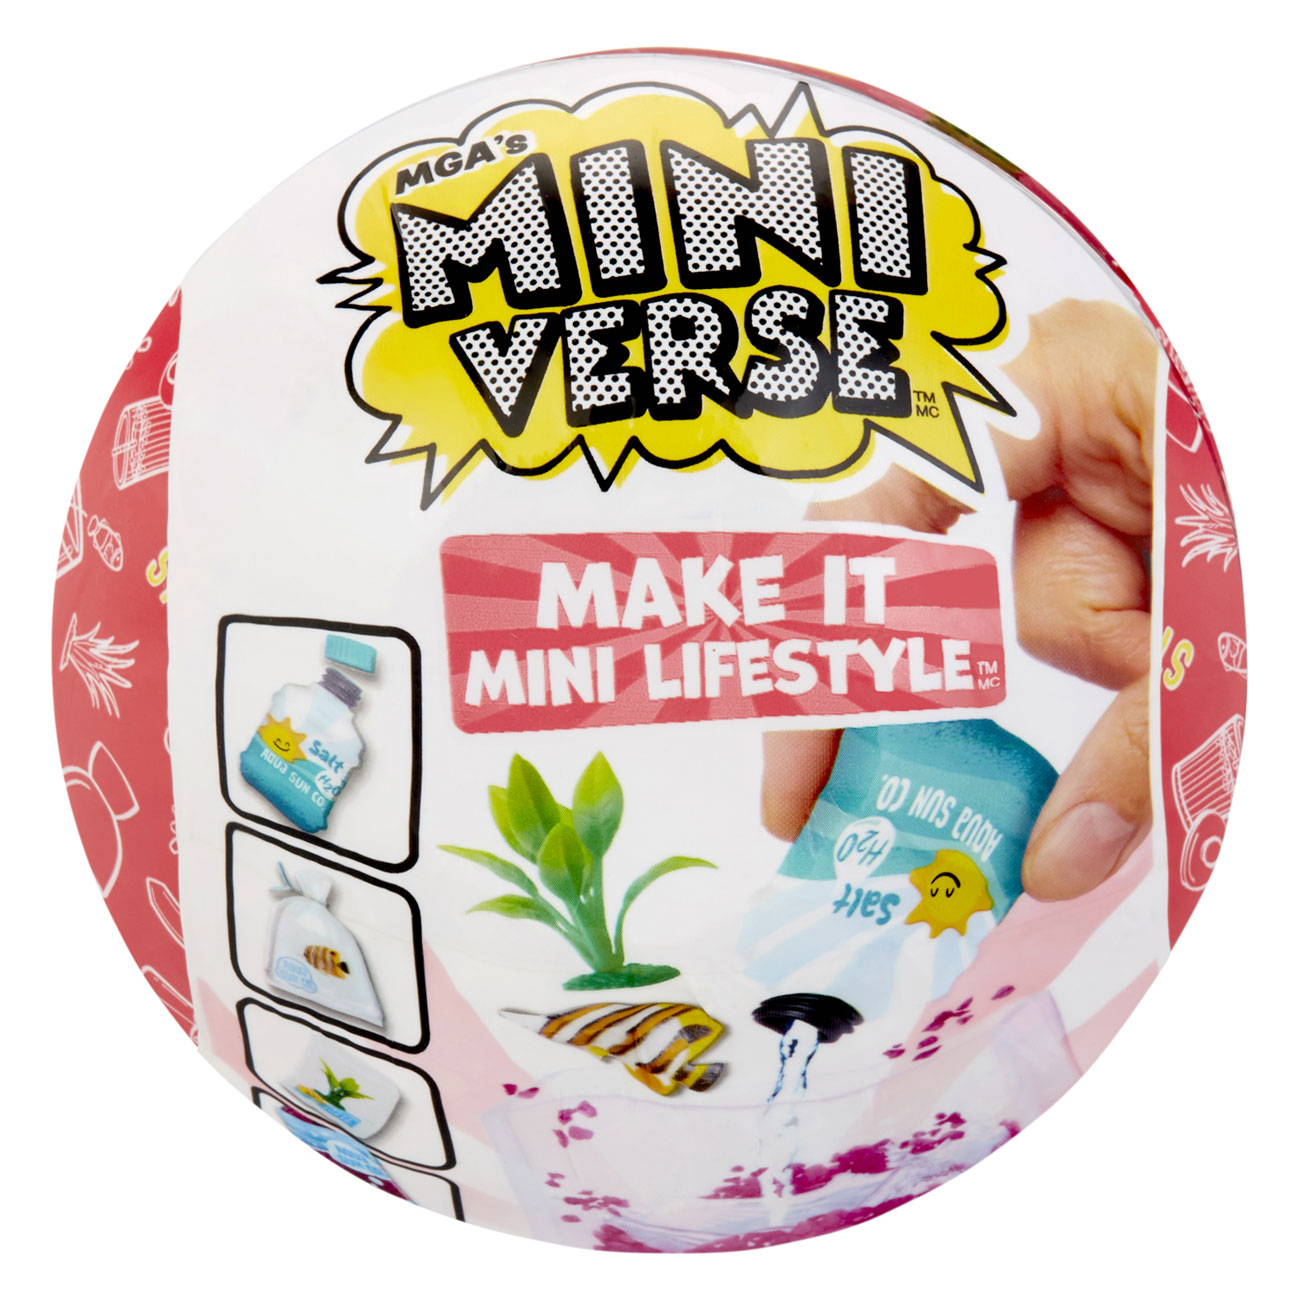 Miniverse de MGA - Collection Make It Mini Lifestyle Série 1